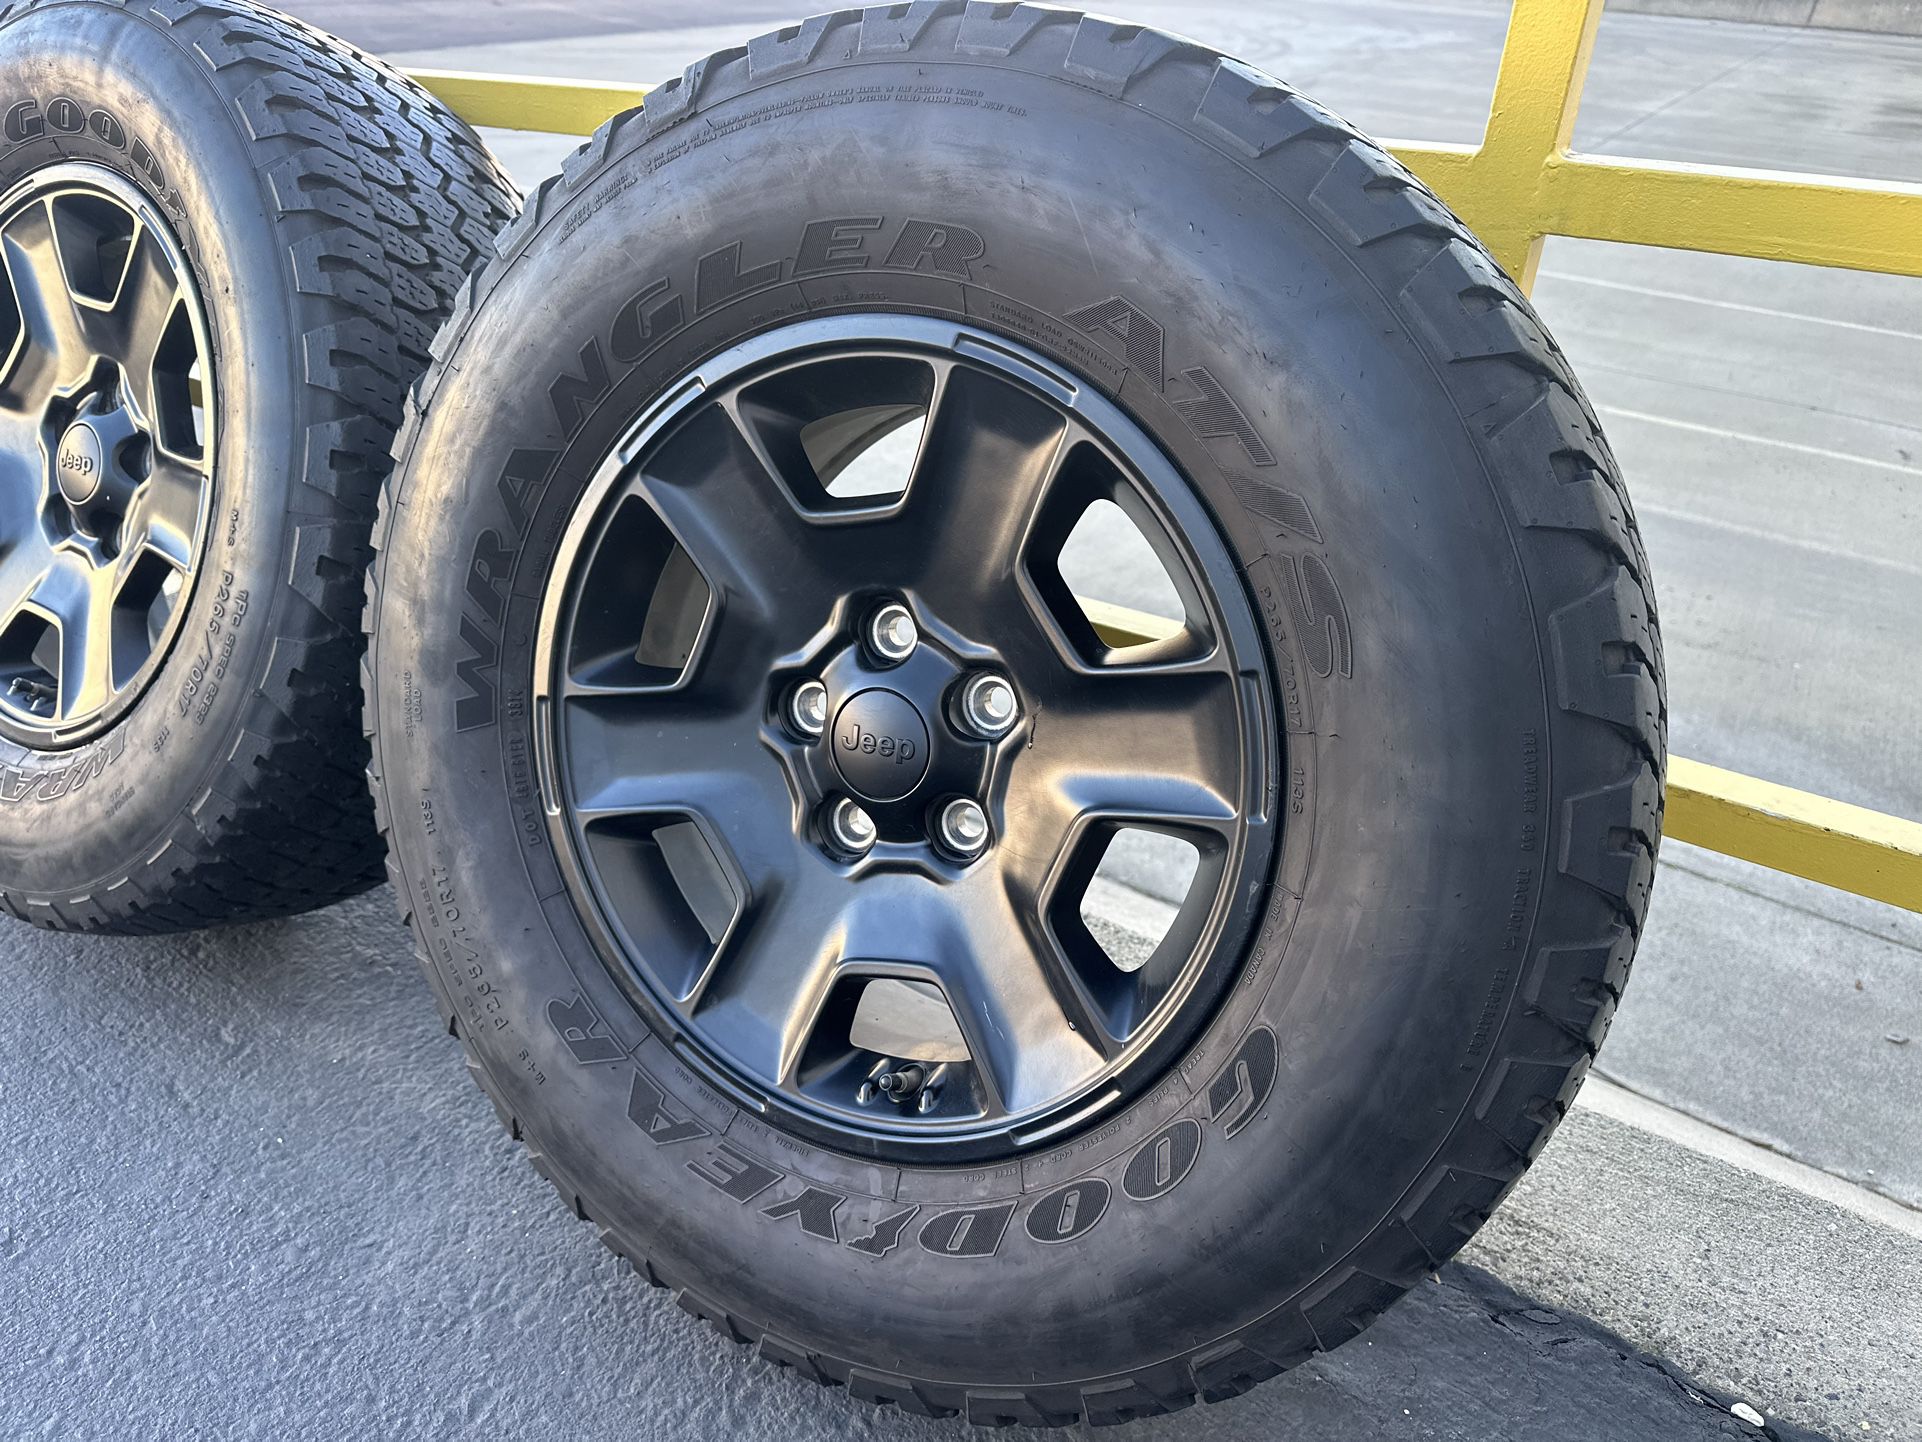 2023 Jeep Gladiator 17" Wheels Rims and Tires Wrangler Rubicon Grand Cherokee 